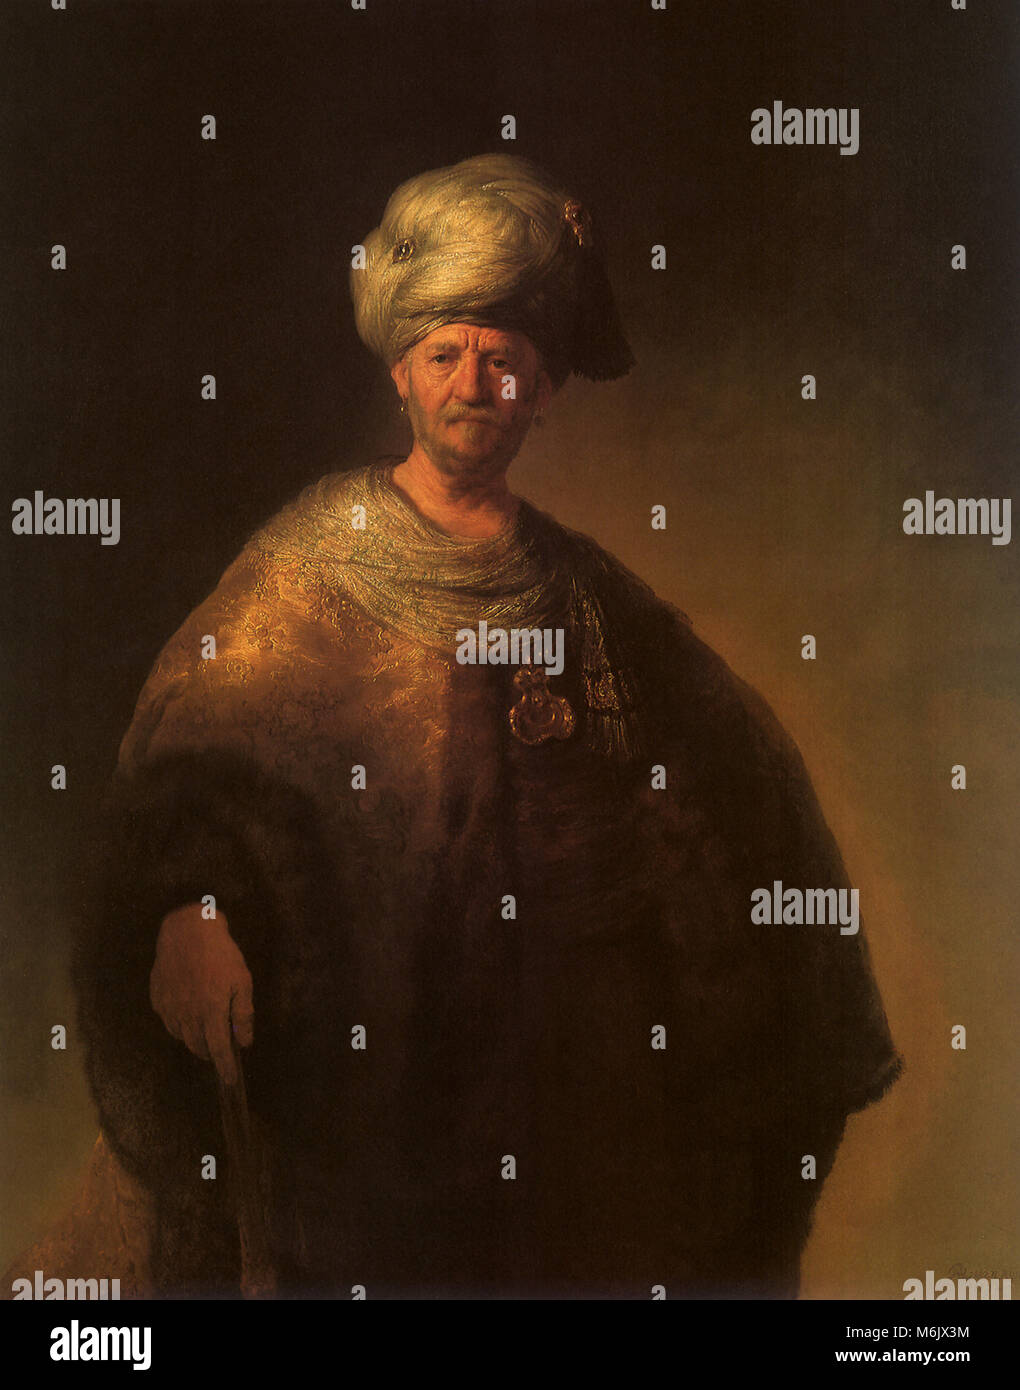 Oriental Nobleman, Rembrandt, Harmensz van Rijn, 1632. Stock Photo